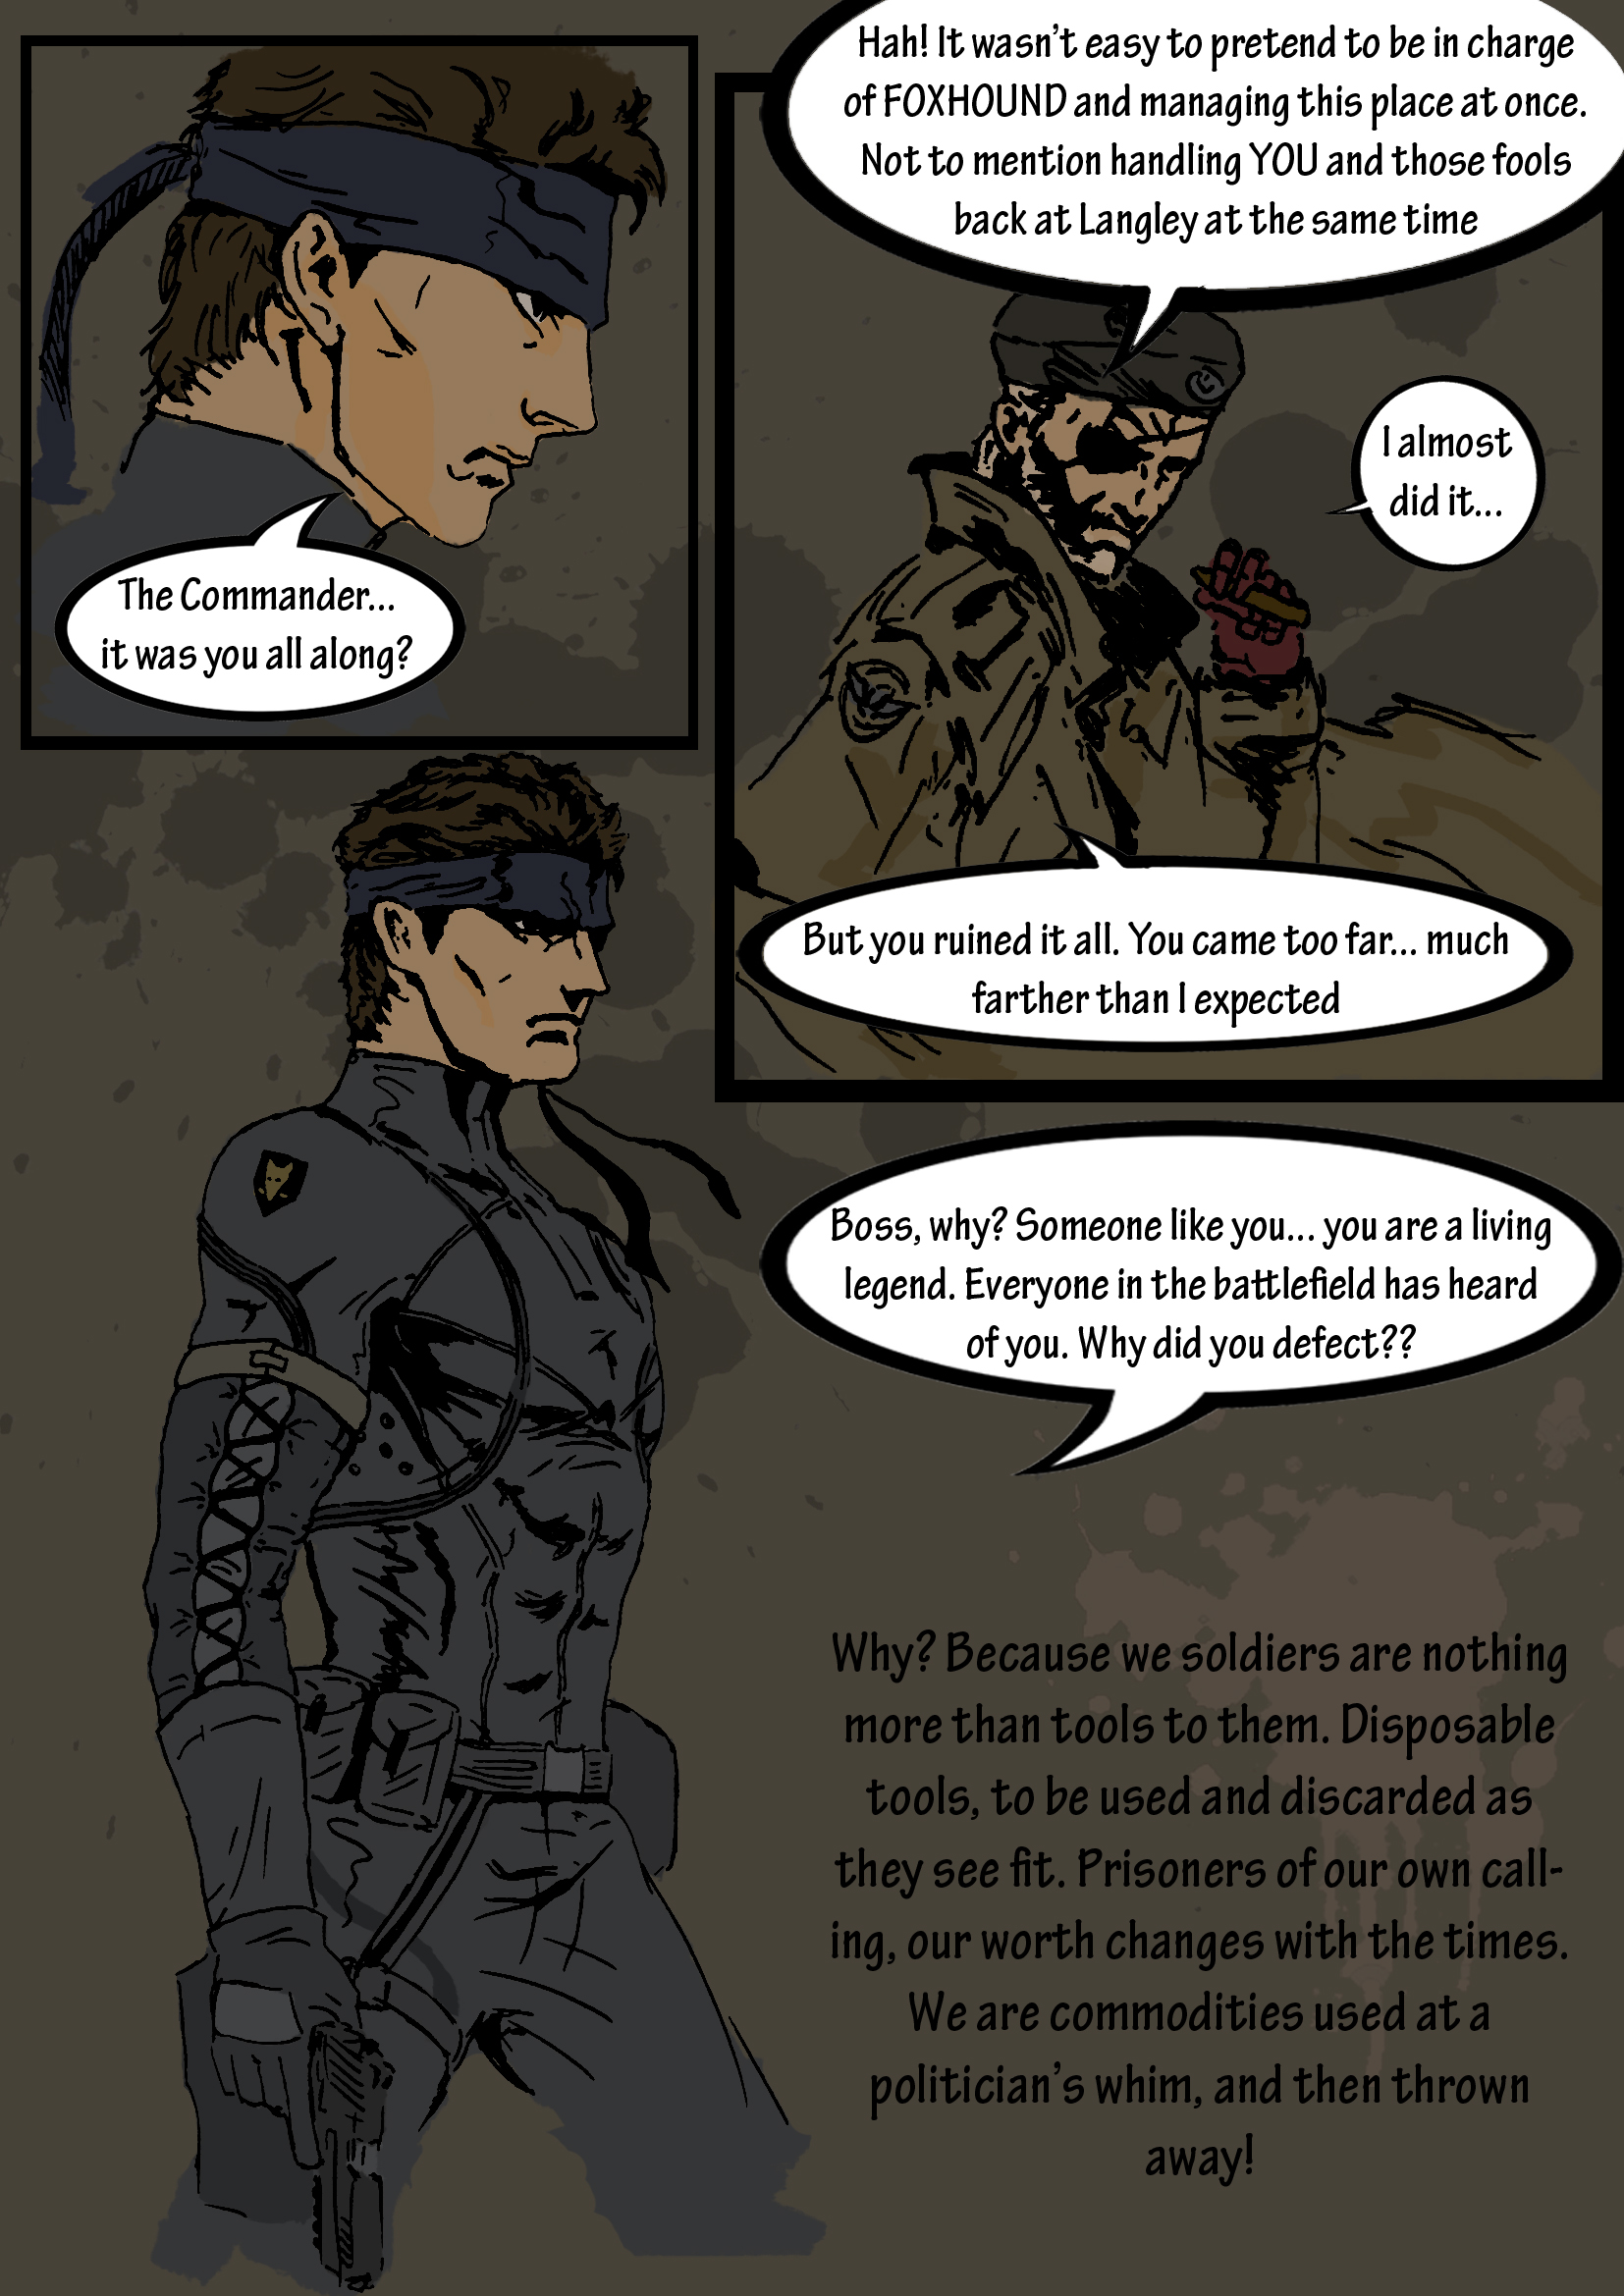 Metal Gear 2: Solid Snake by cheddarpaladin.deviantart.com on